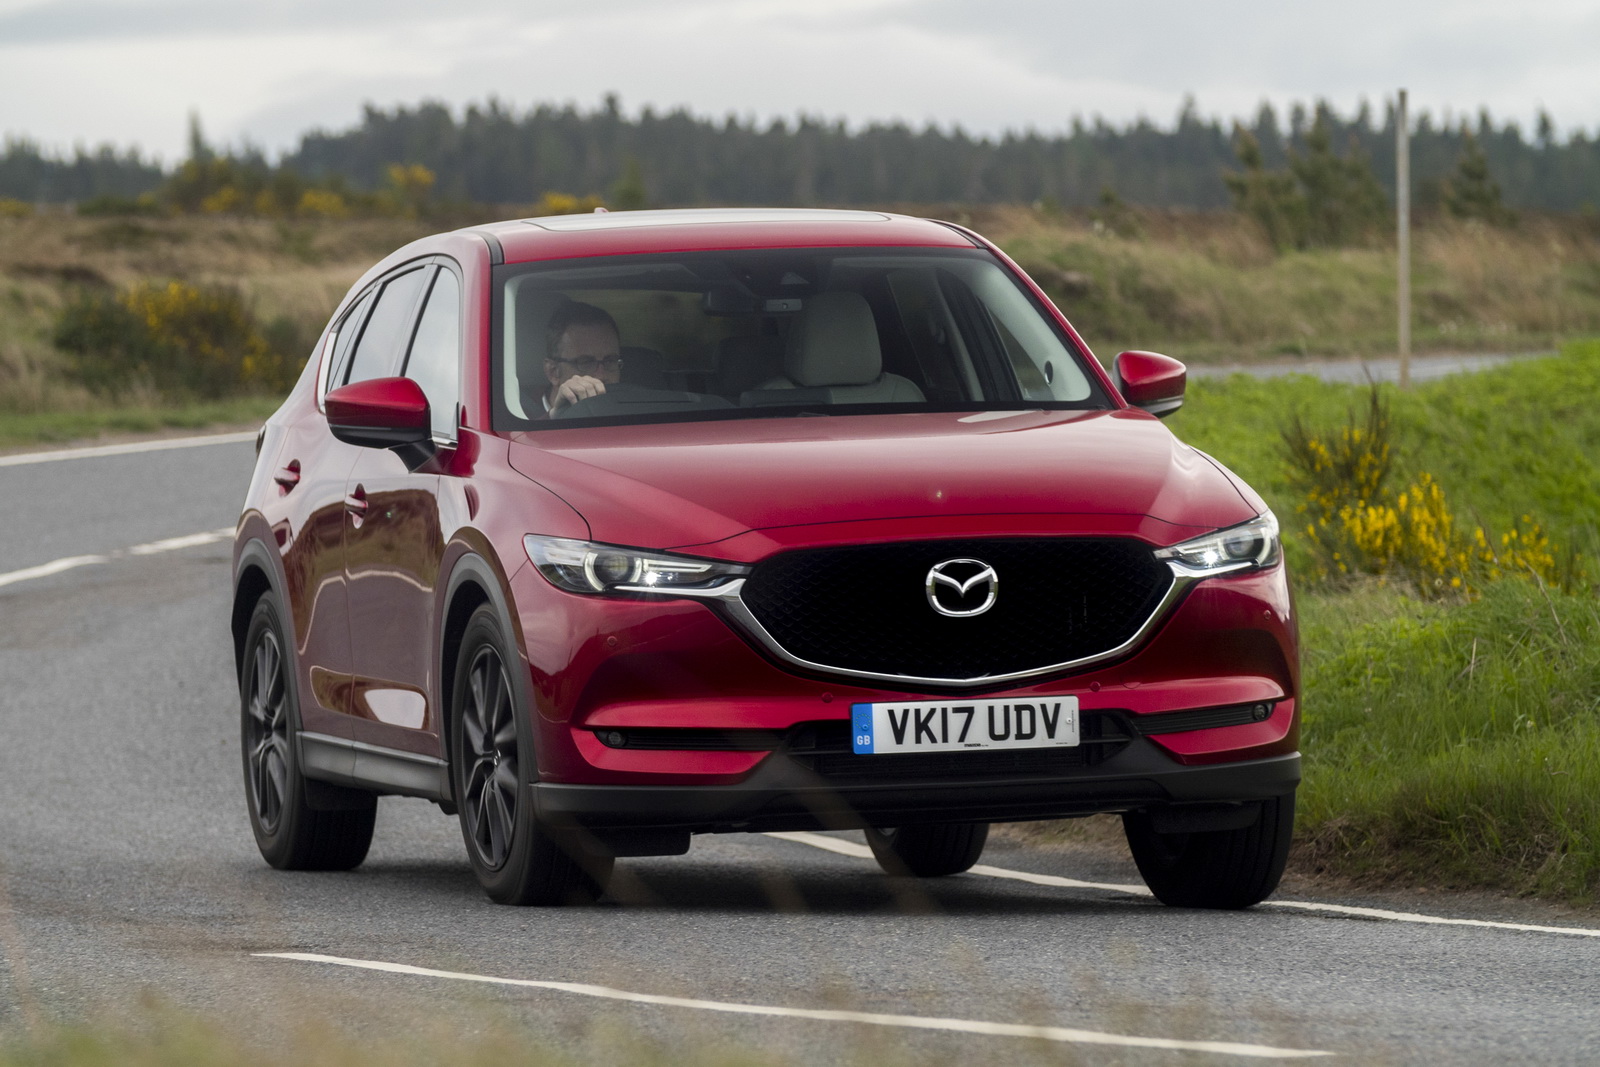 2017 Mazda CX-5 Priced From £23,695 In The UK [46 Pics]